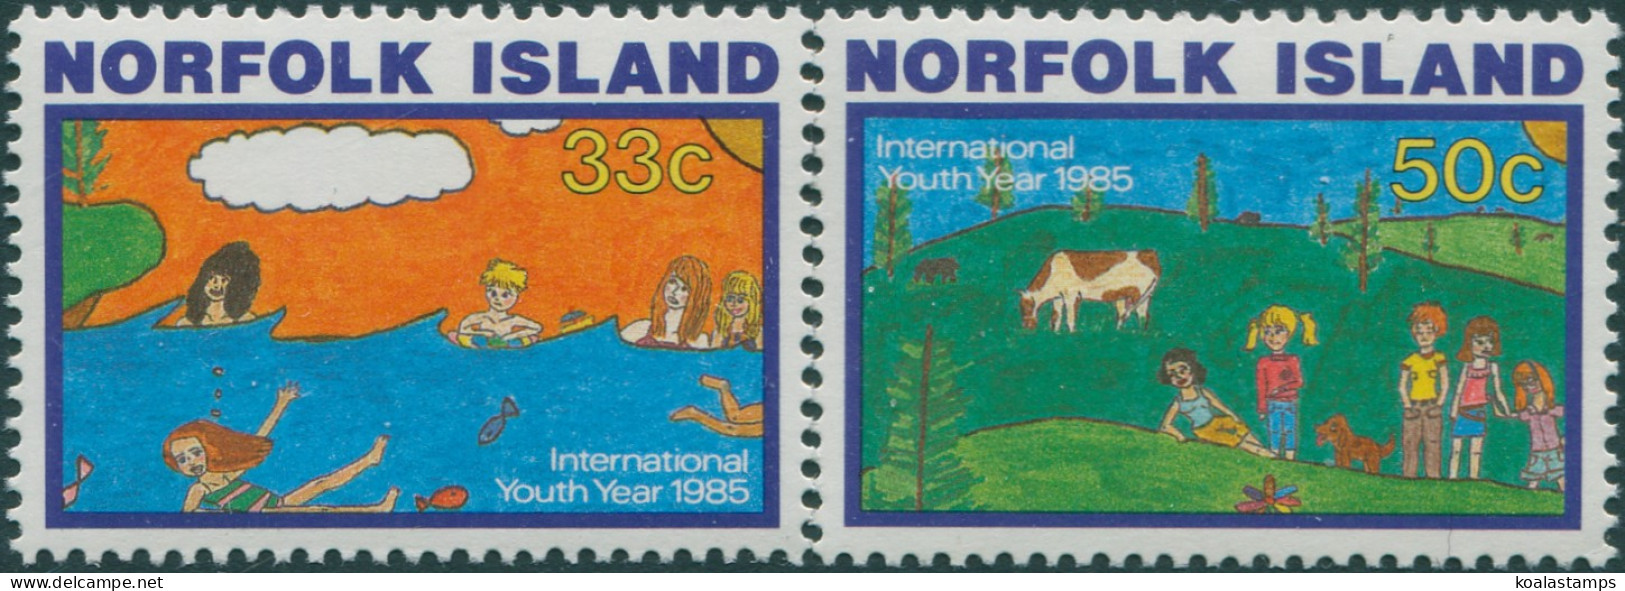 Norfolk Island 1985 SG369-370 Youth Year Set MNH - Norfolk Island